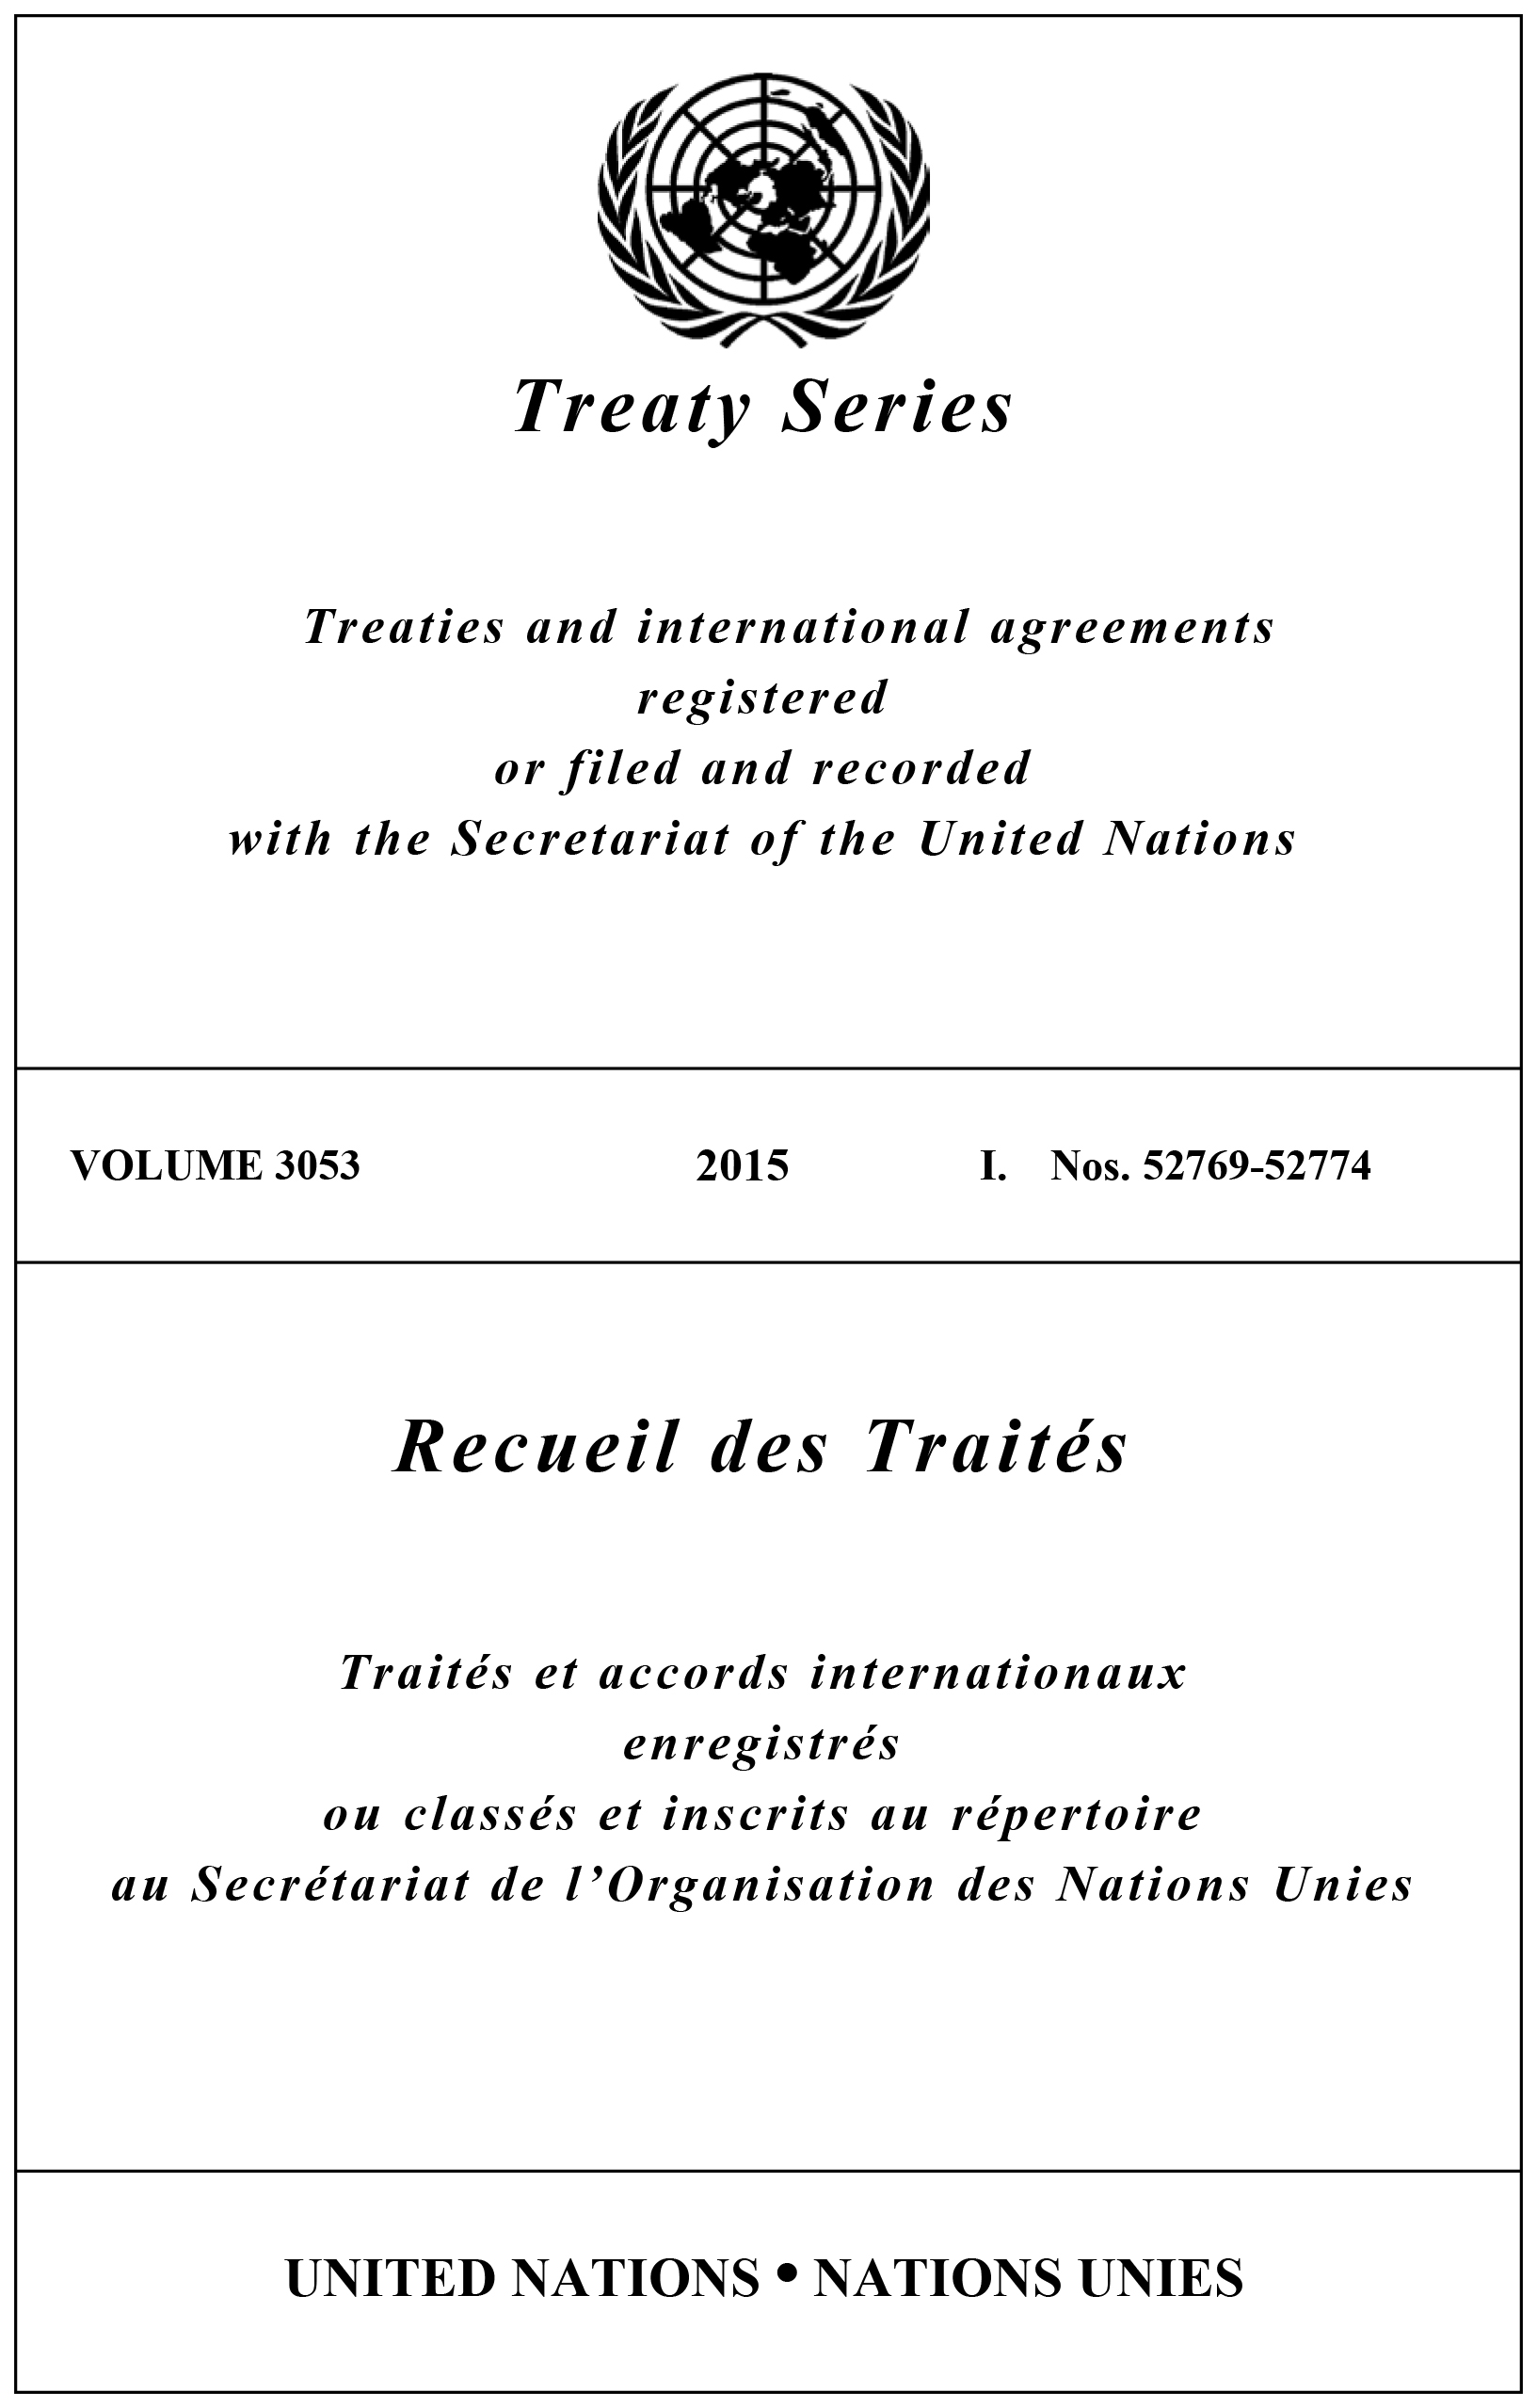 image of Treaty Series 3053